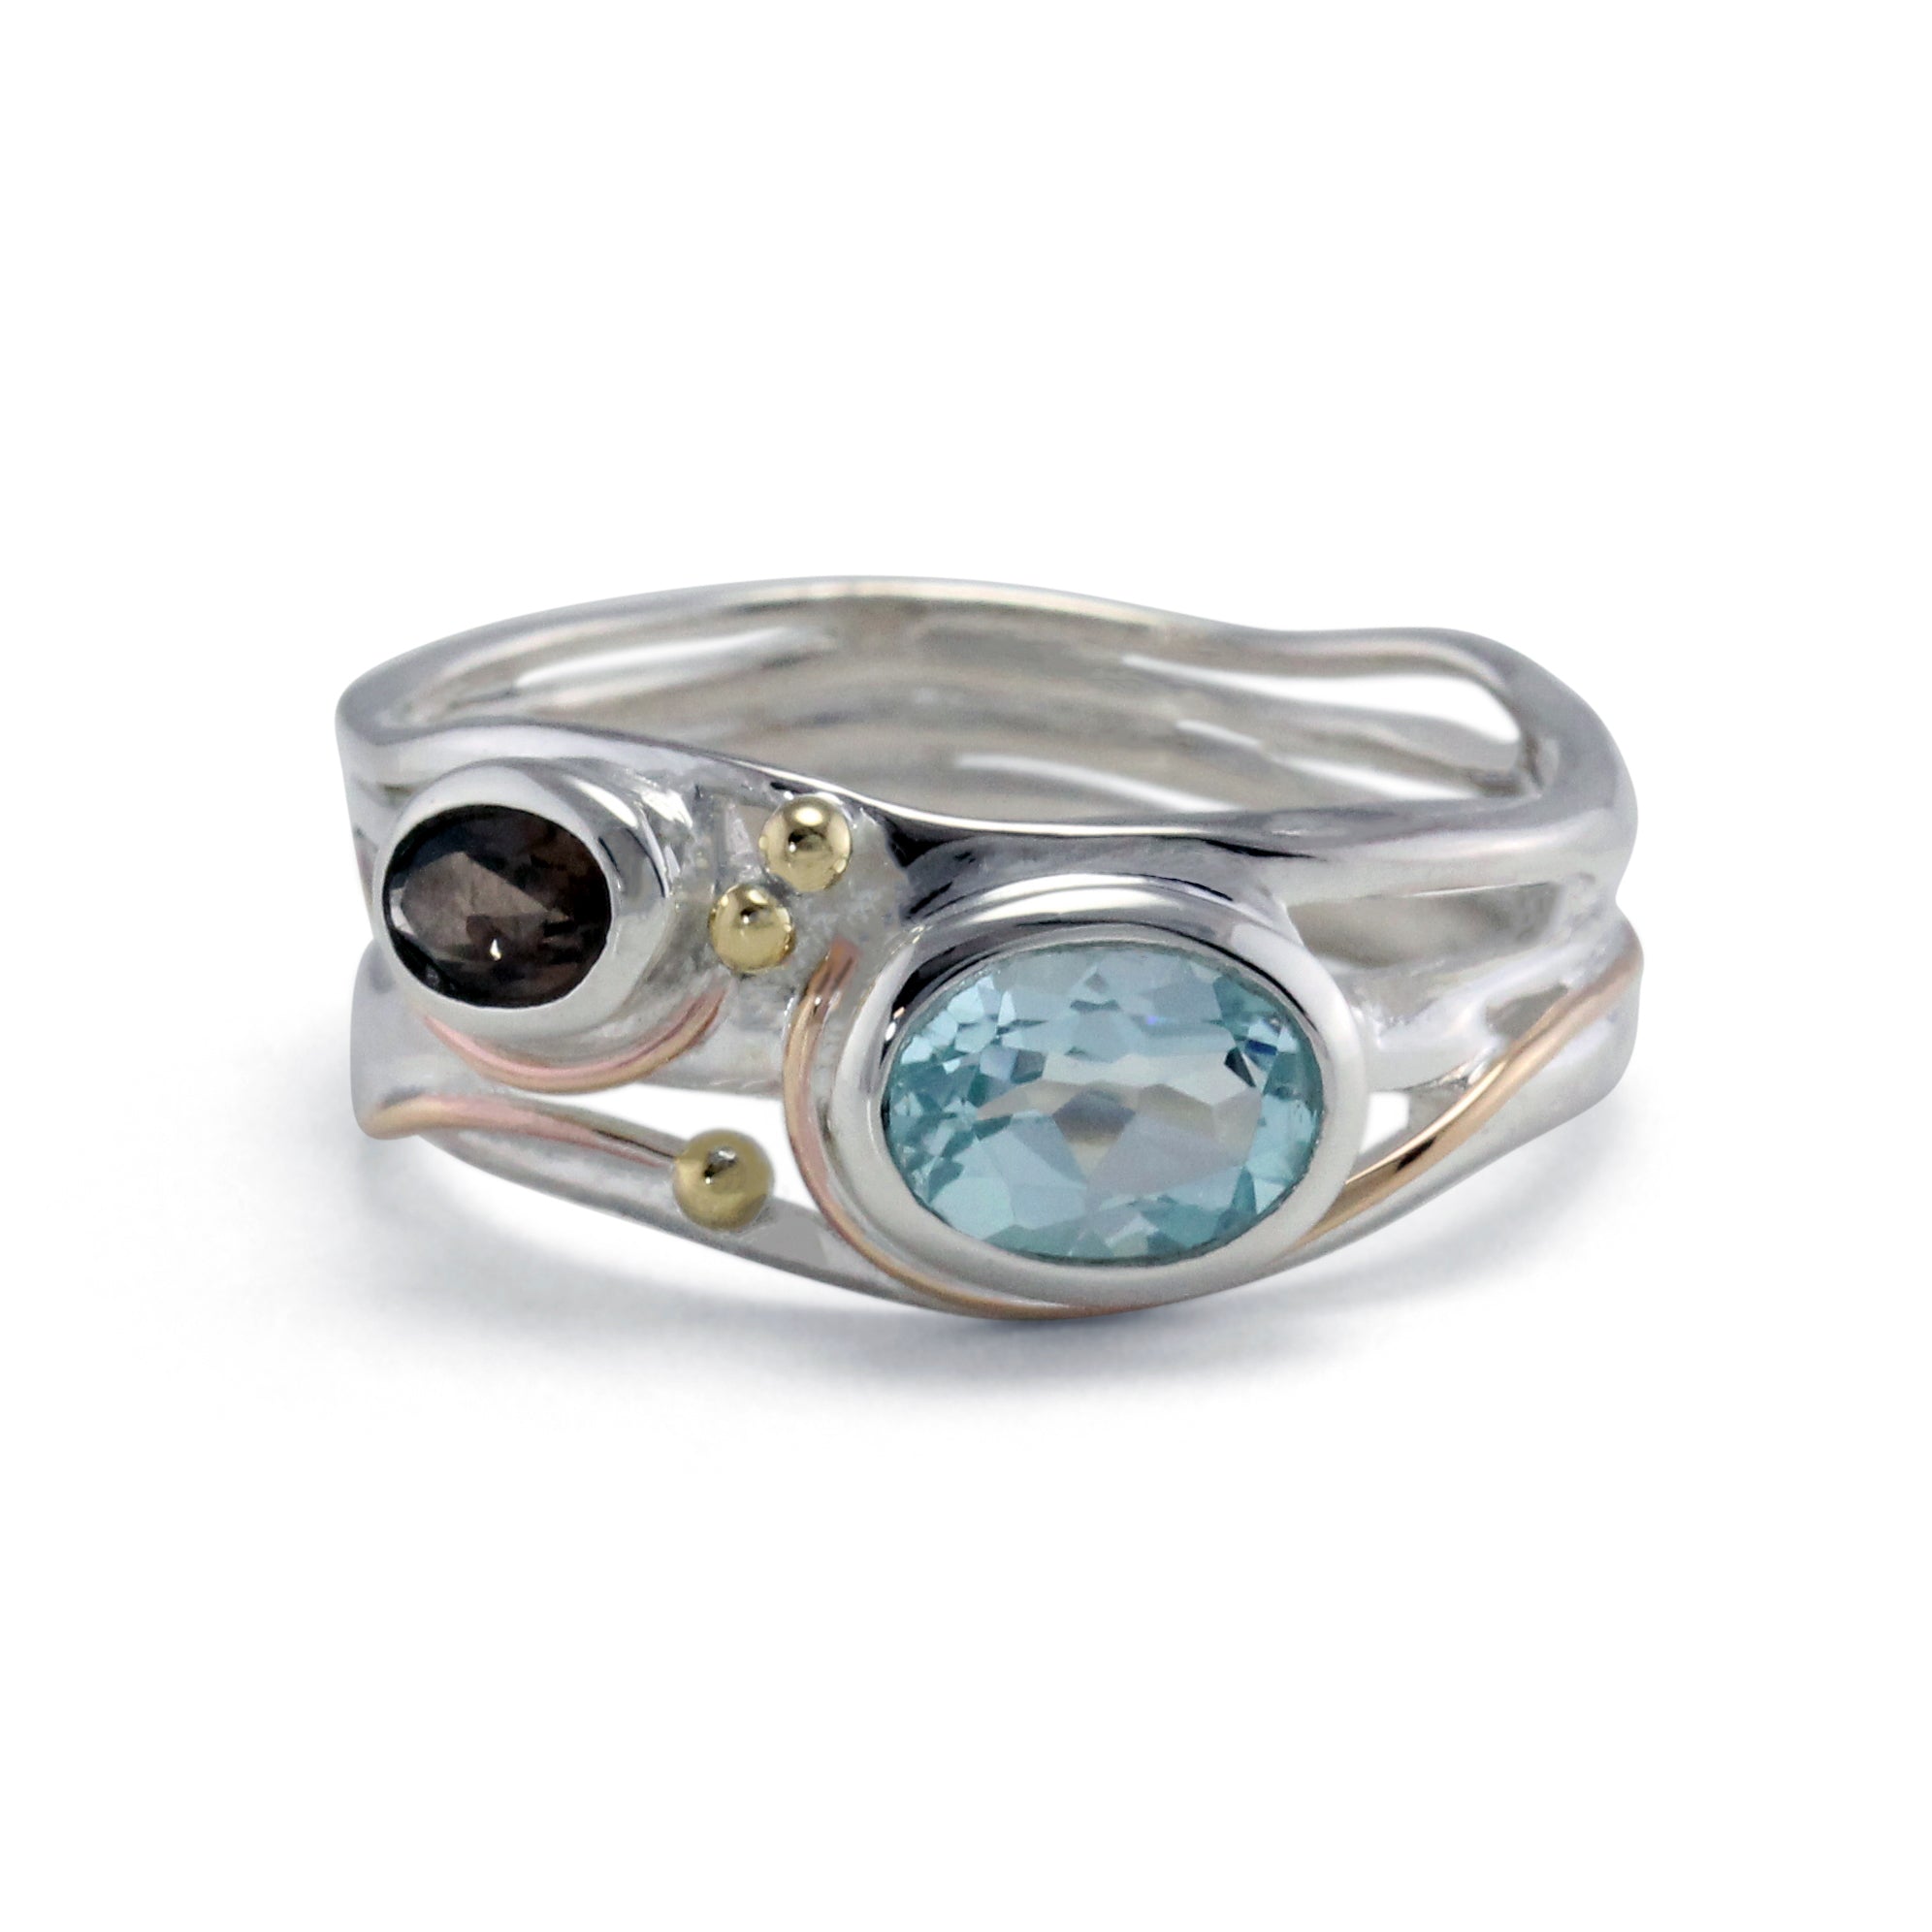 Topaz & Quartz Ring - The Nancy Smillie Shop - Art, Jewellery & Designer Gifts Glasgow